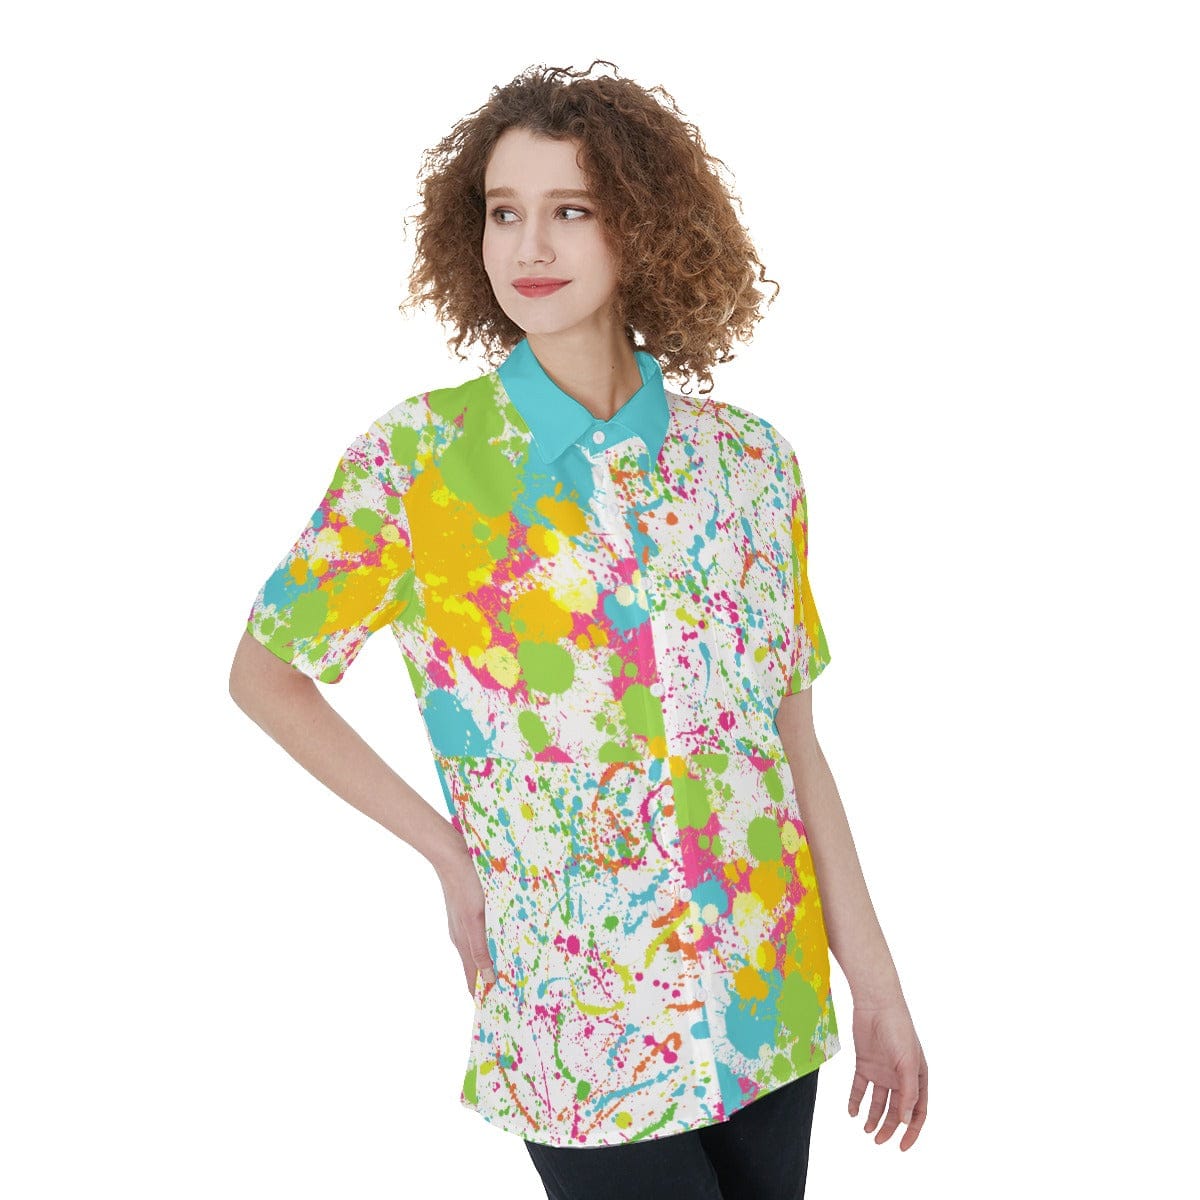 Yoycol Skirt Set Paint Splatter - Women's Short Sleeve Shirt With Pocket